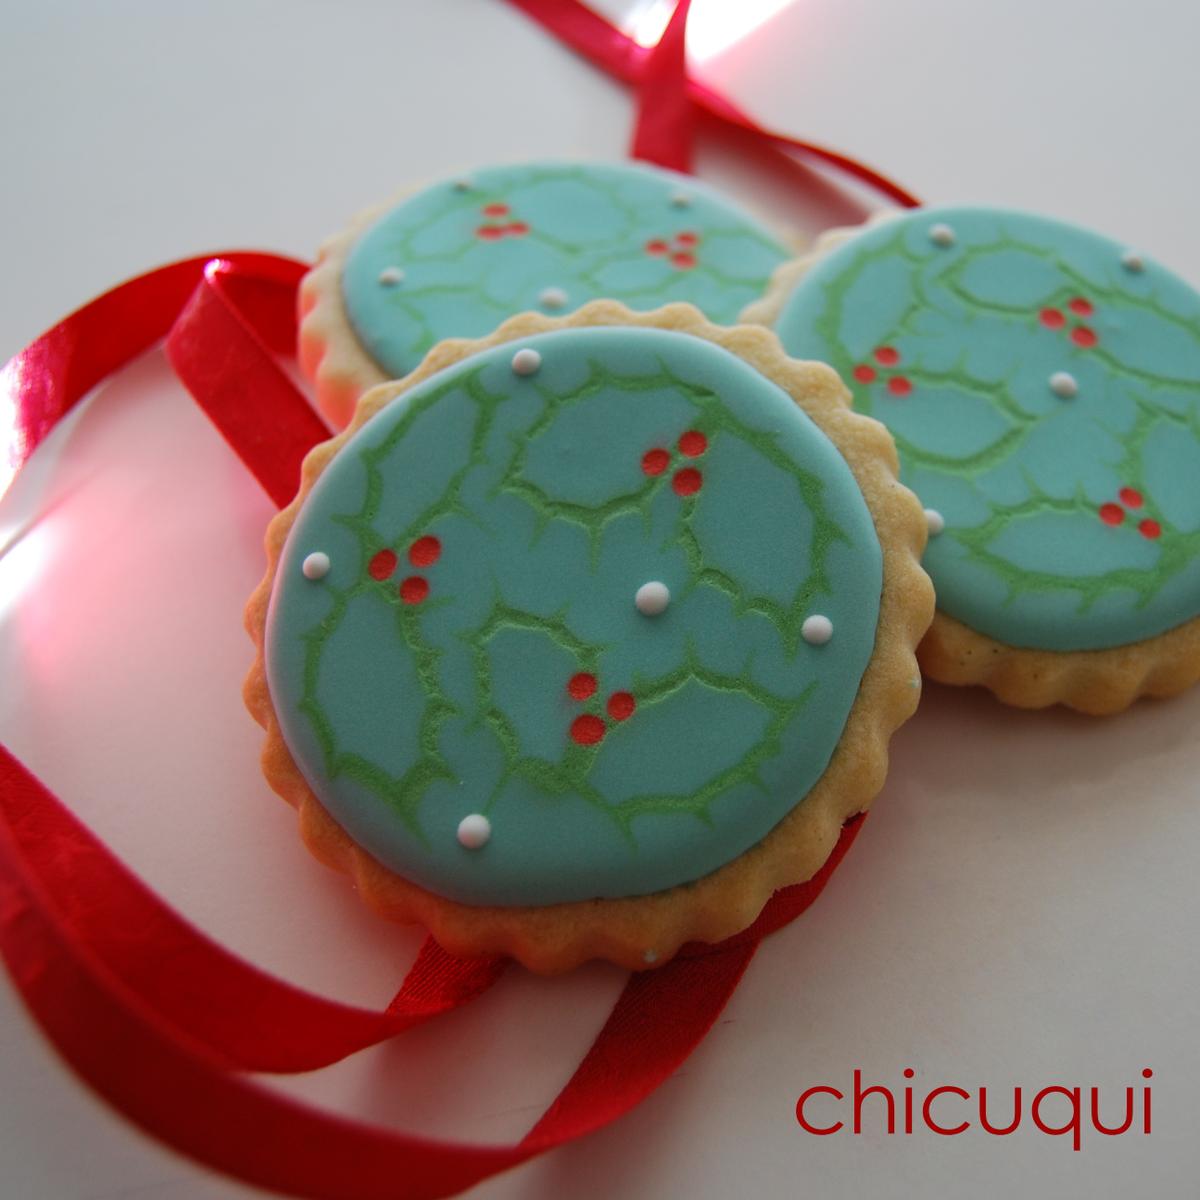 galletas-decoradas-navidad-decorated-cookies-christmas-chicuqui.com